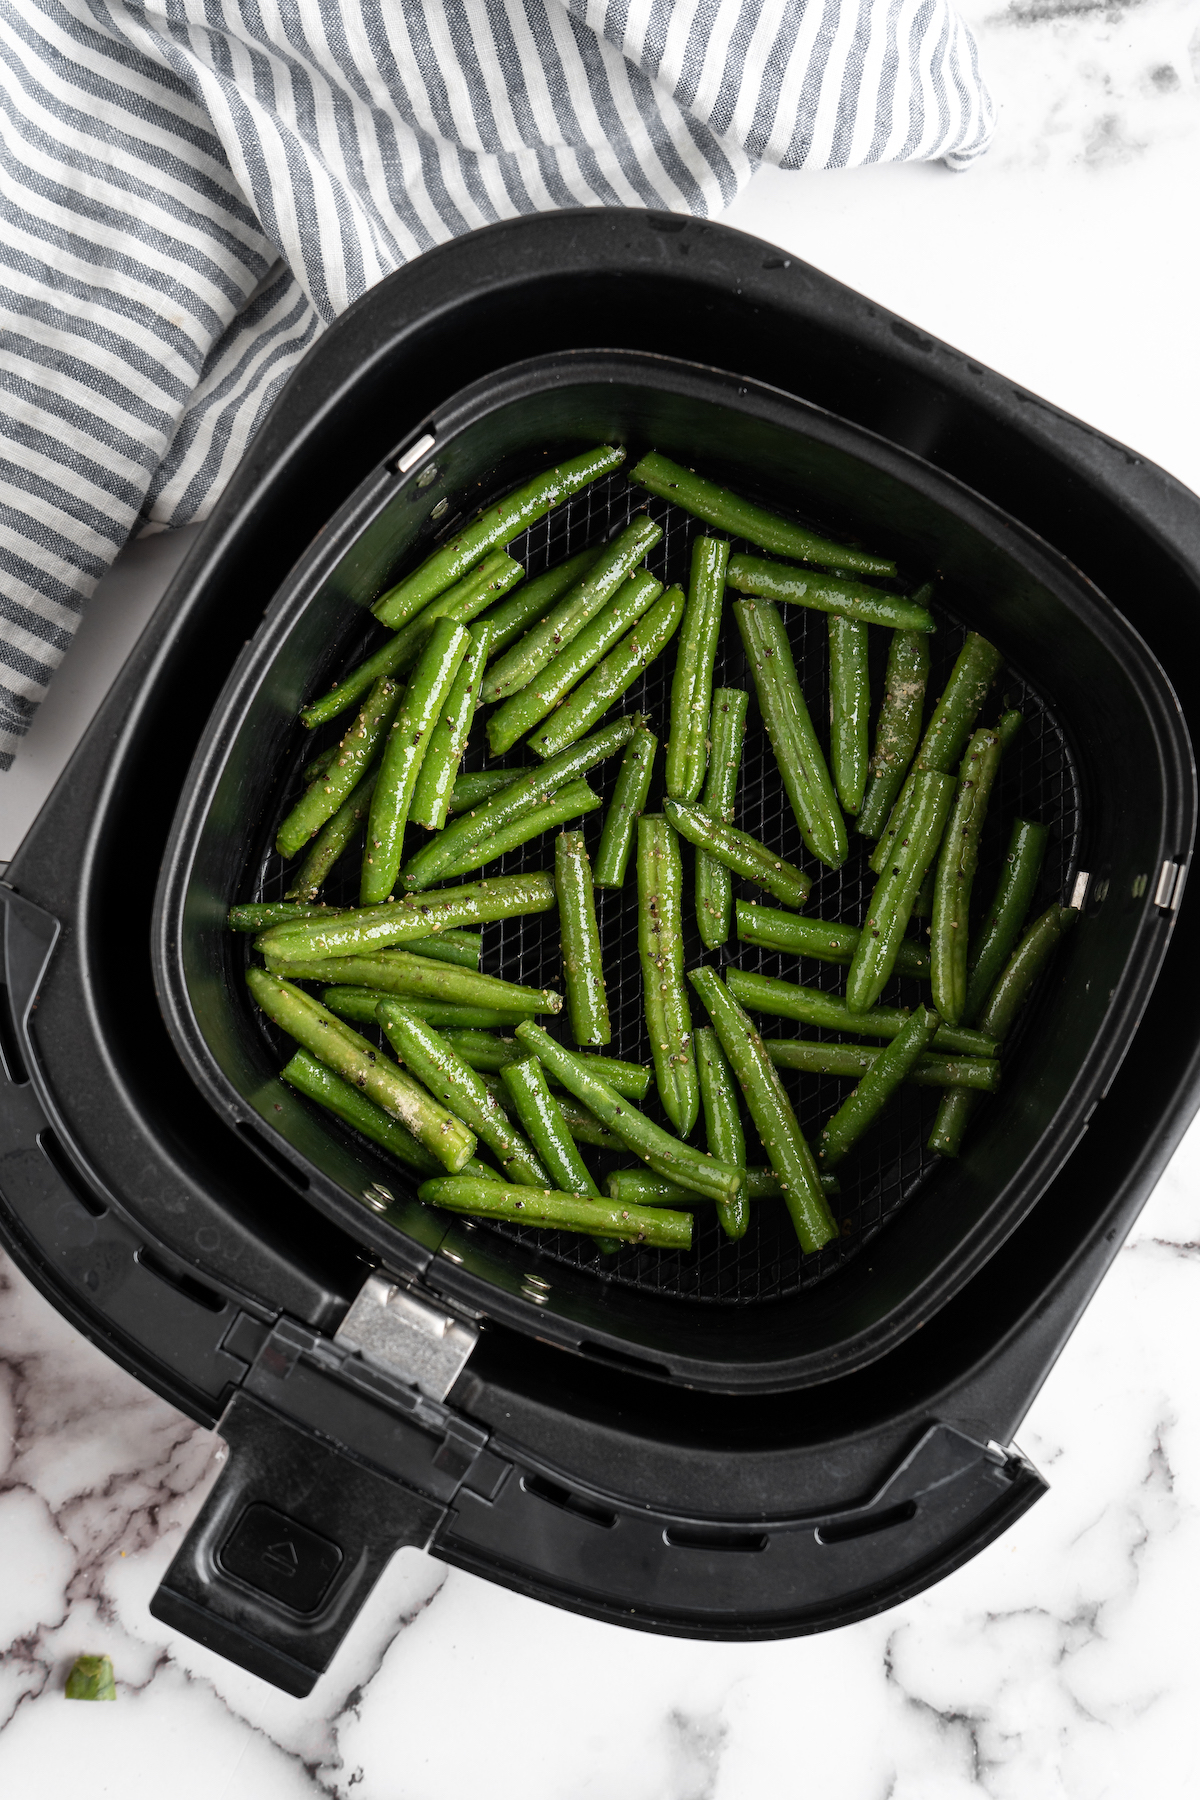 Green beans in air fryer basket